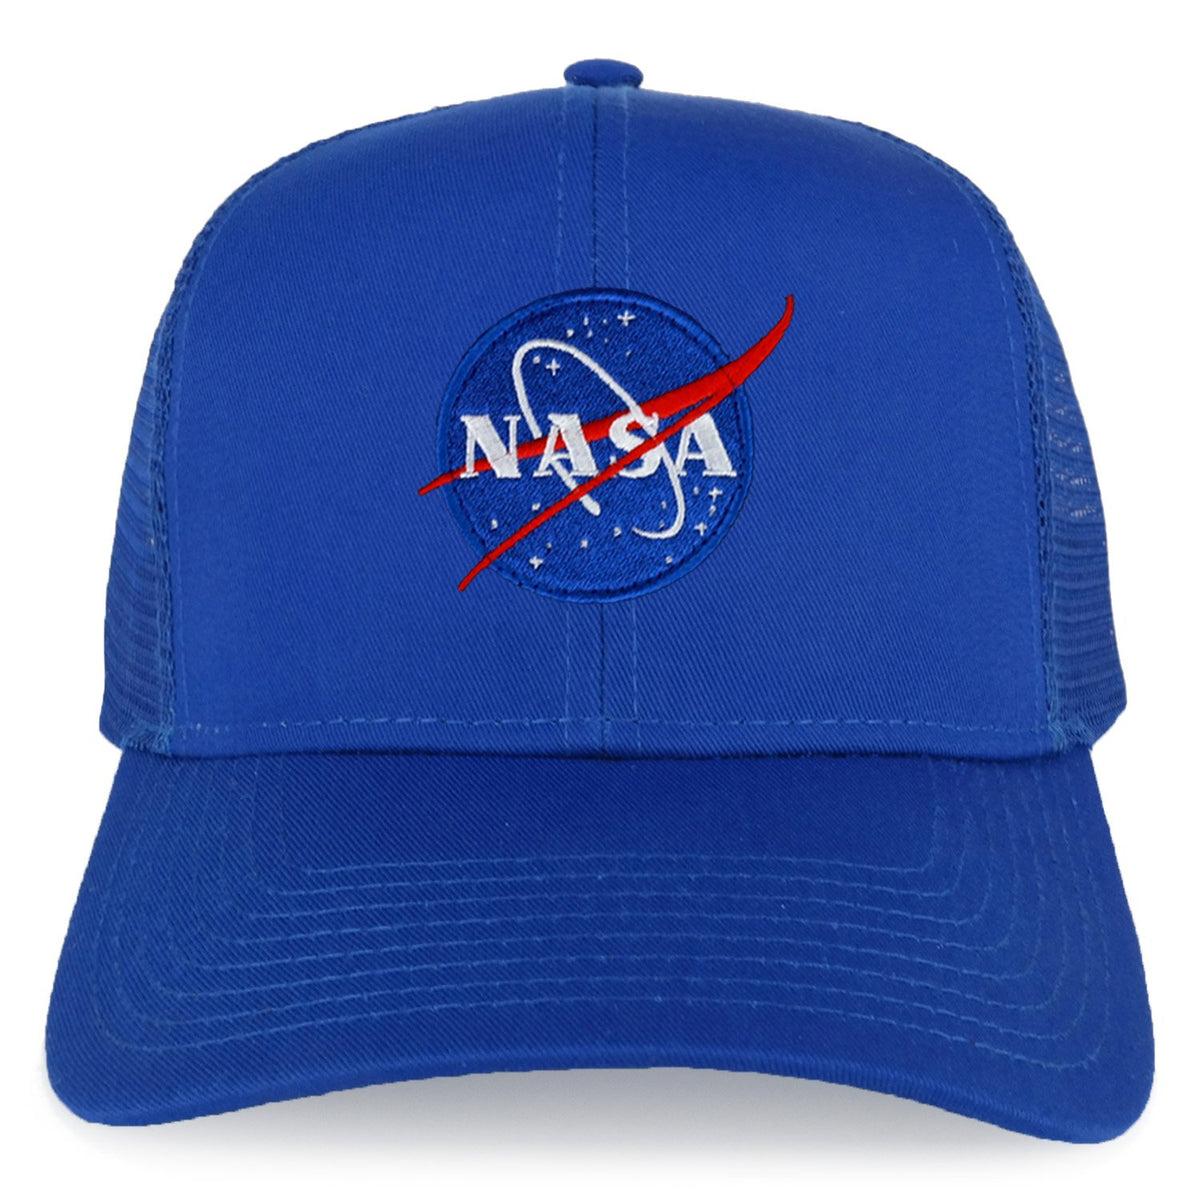 Armycrew XXL Oversize NASA Small Insignia Logo Patch Mesh Back Trucker Baseball Cap - Black